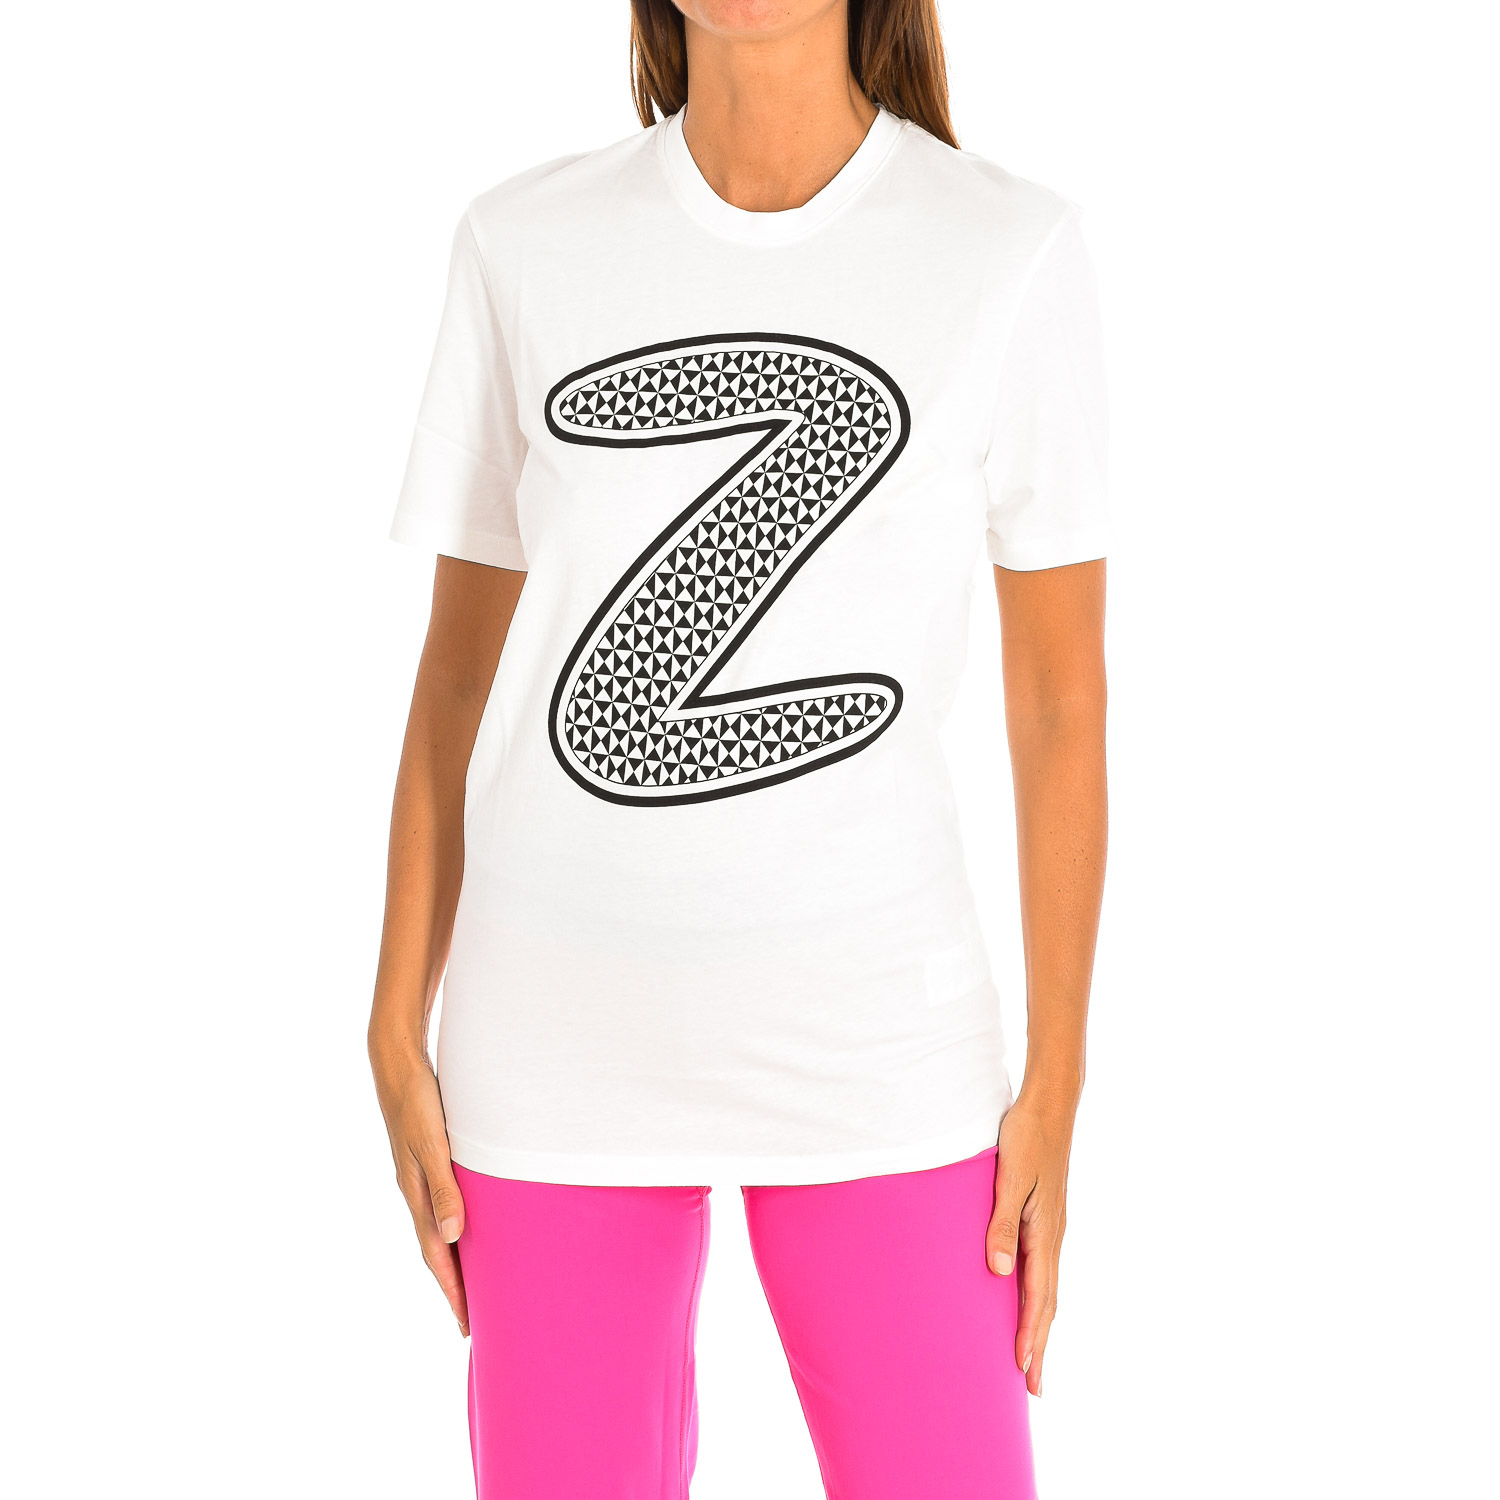 Camiseta Deportiva Zumba Z2t00164 - negro-blanco - 